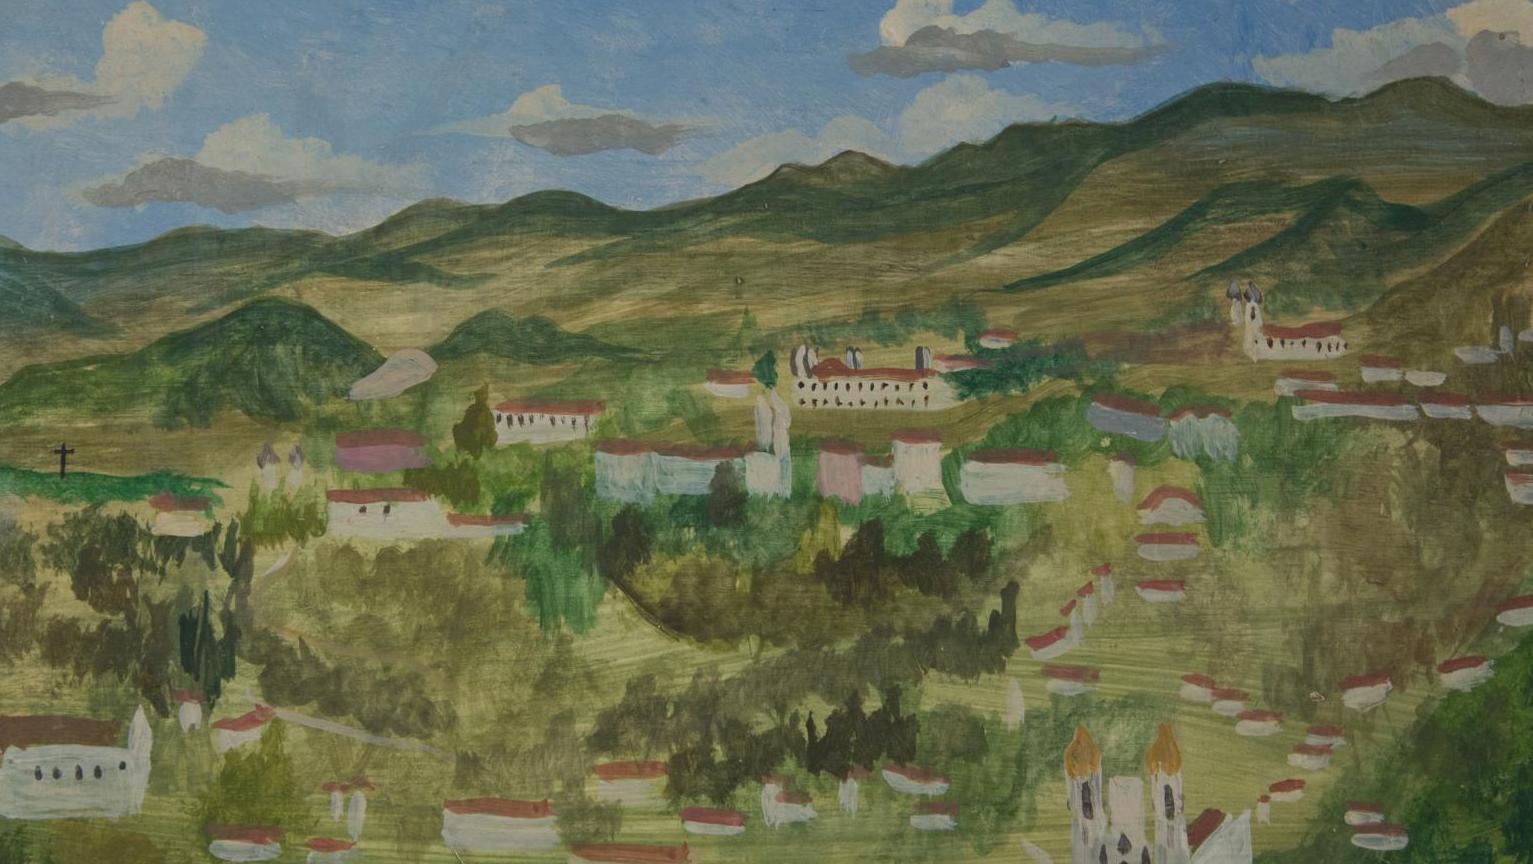 Alberto da Veiga Guignard (1896-1962), Ouro Preto, 1955, huile sur panneau, 37 x 45 cm.... Paysage du Brésil